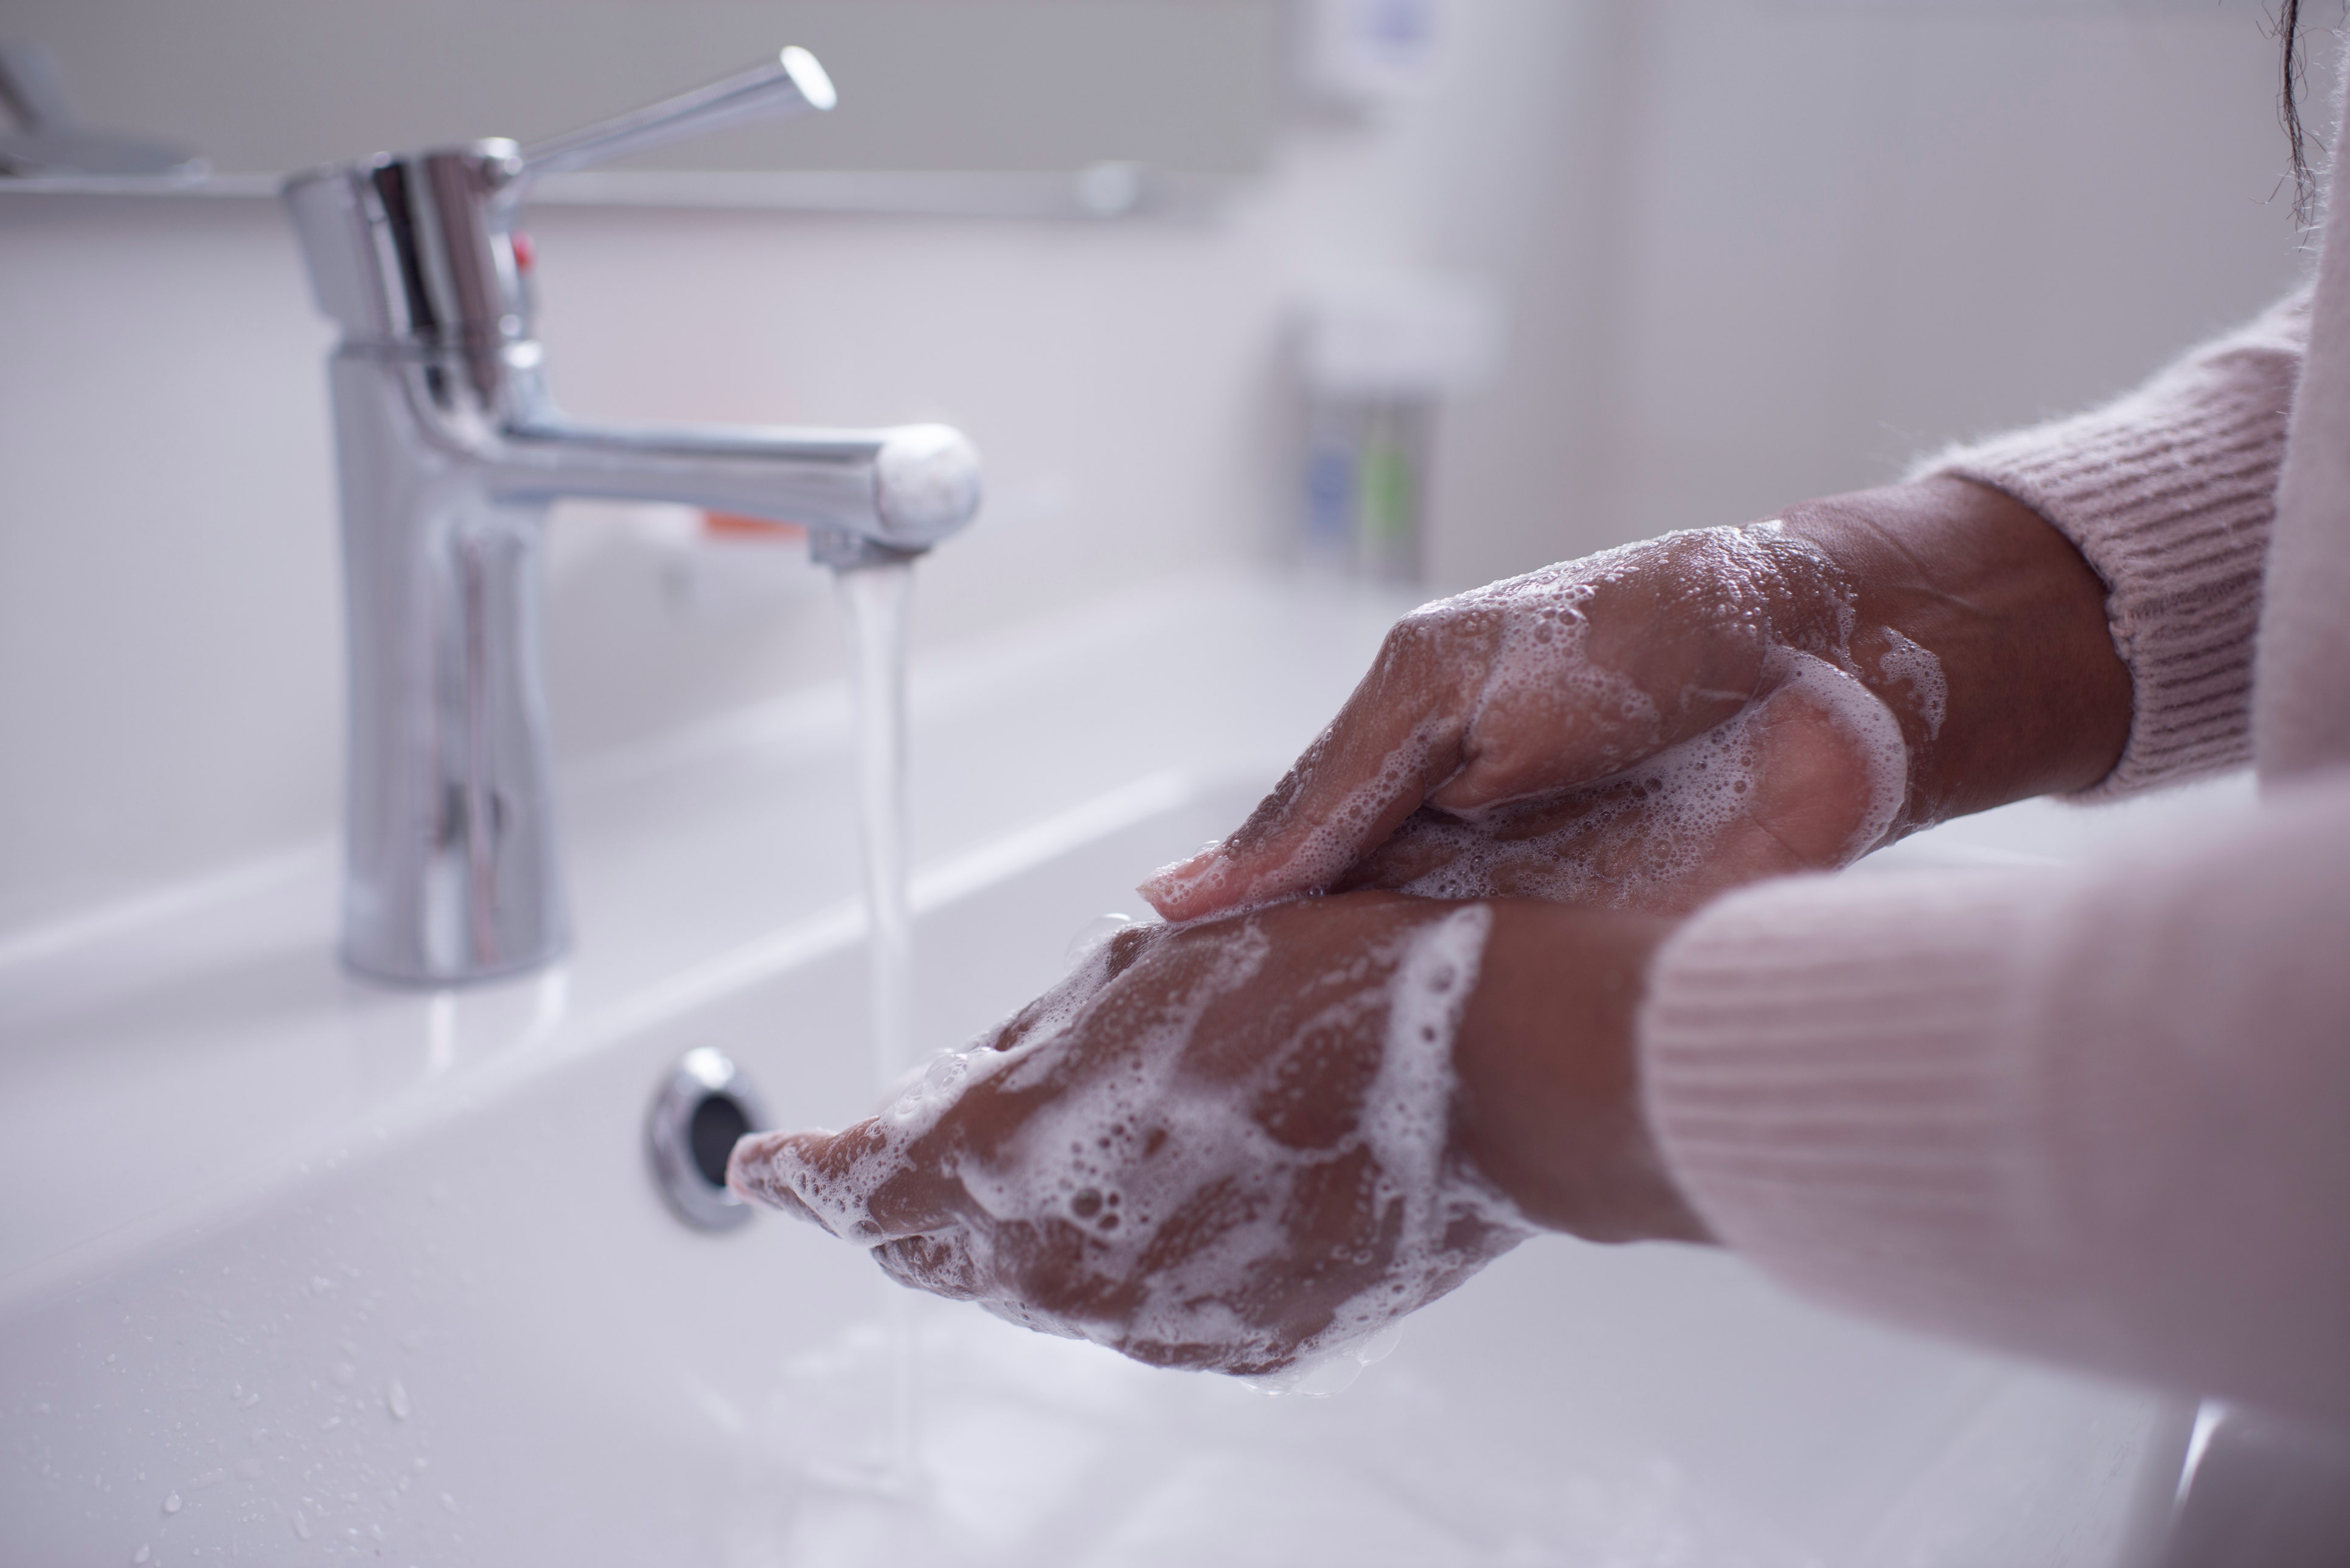 Popular hand soap facing recall over bacterial contamination concerns - Fox Business